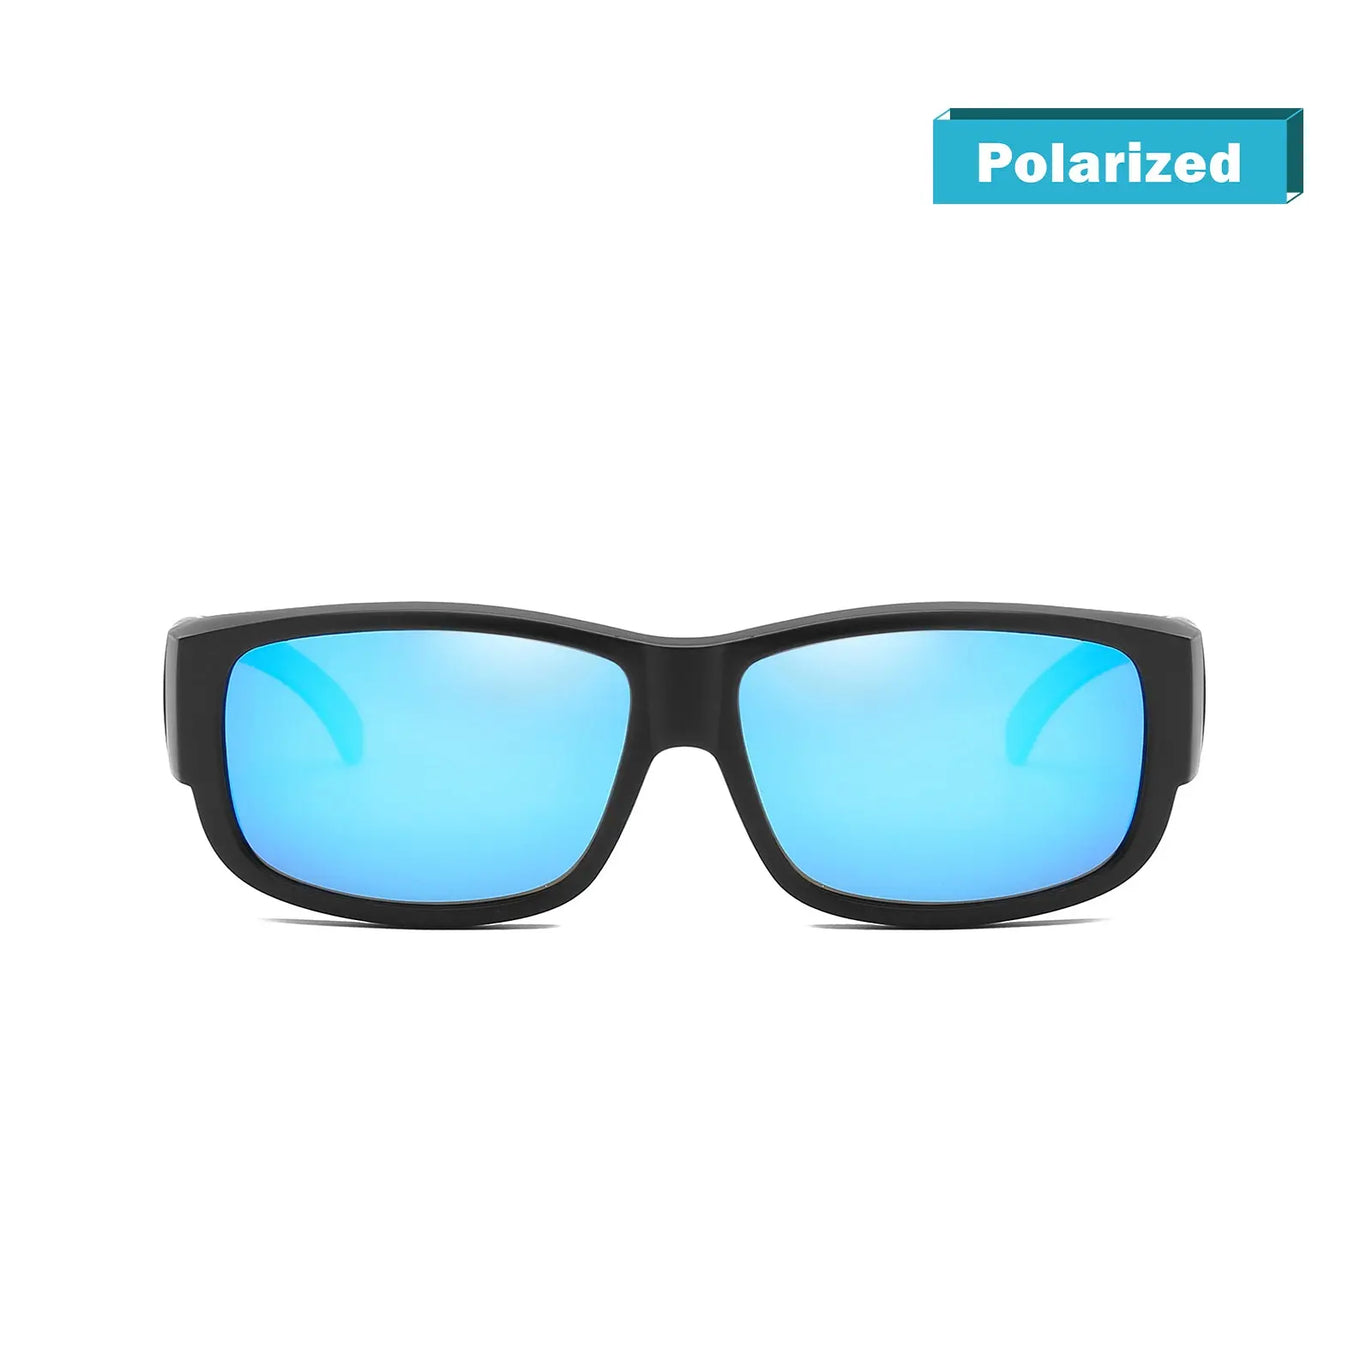 LVIOE Wrap Around Sunglasses, Polarized Lens Wear Over Prescription  Glasses, Fit